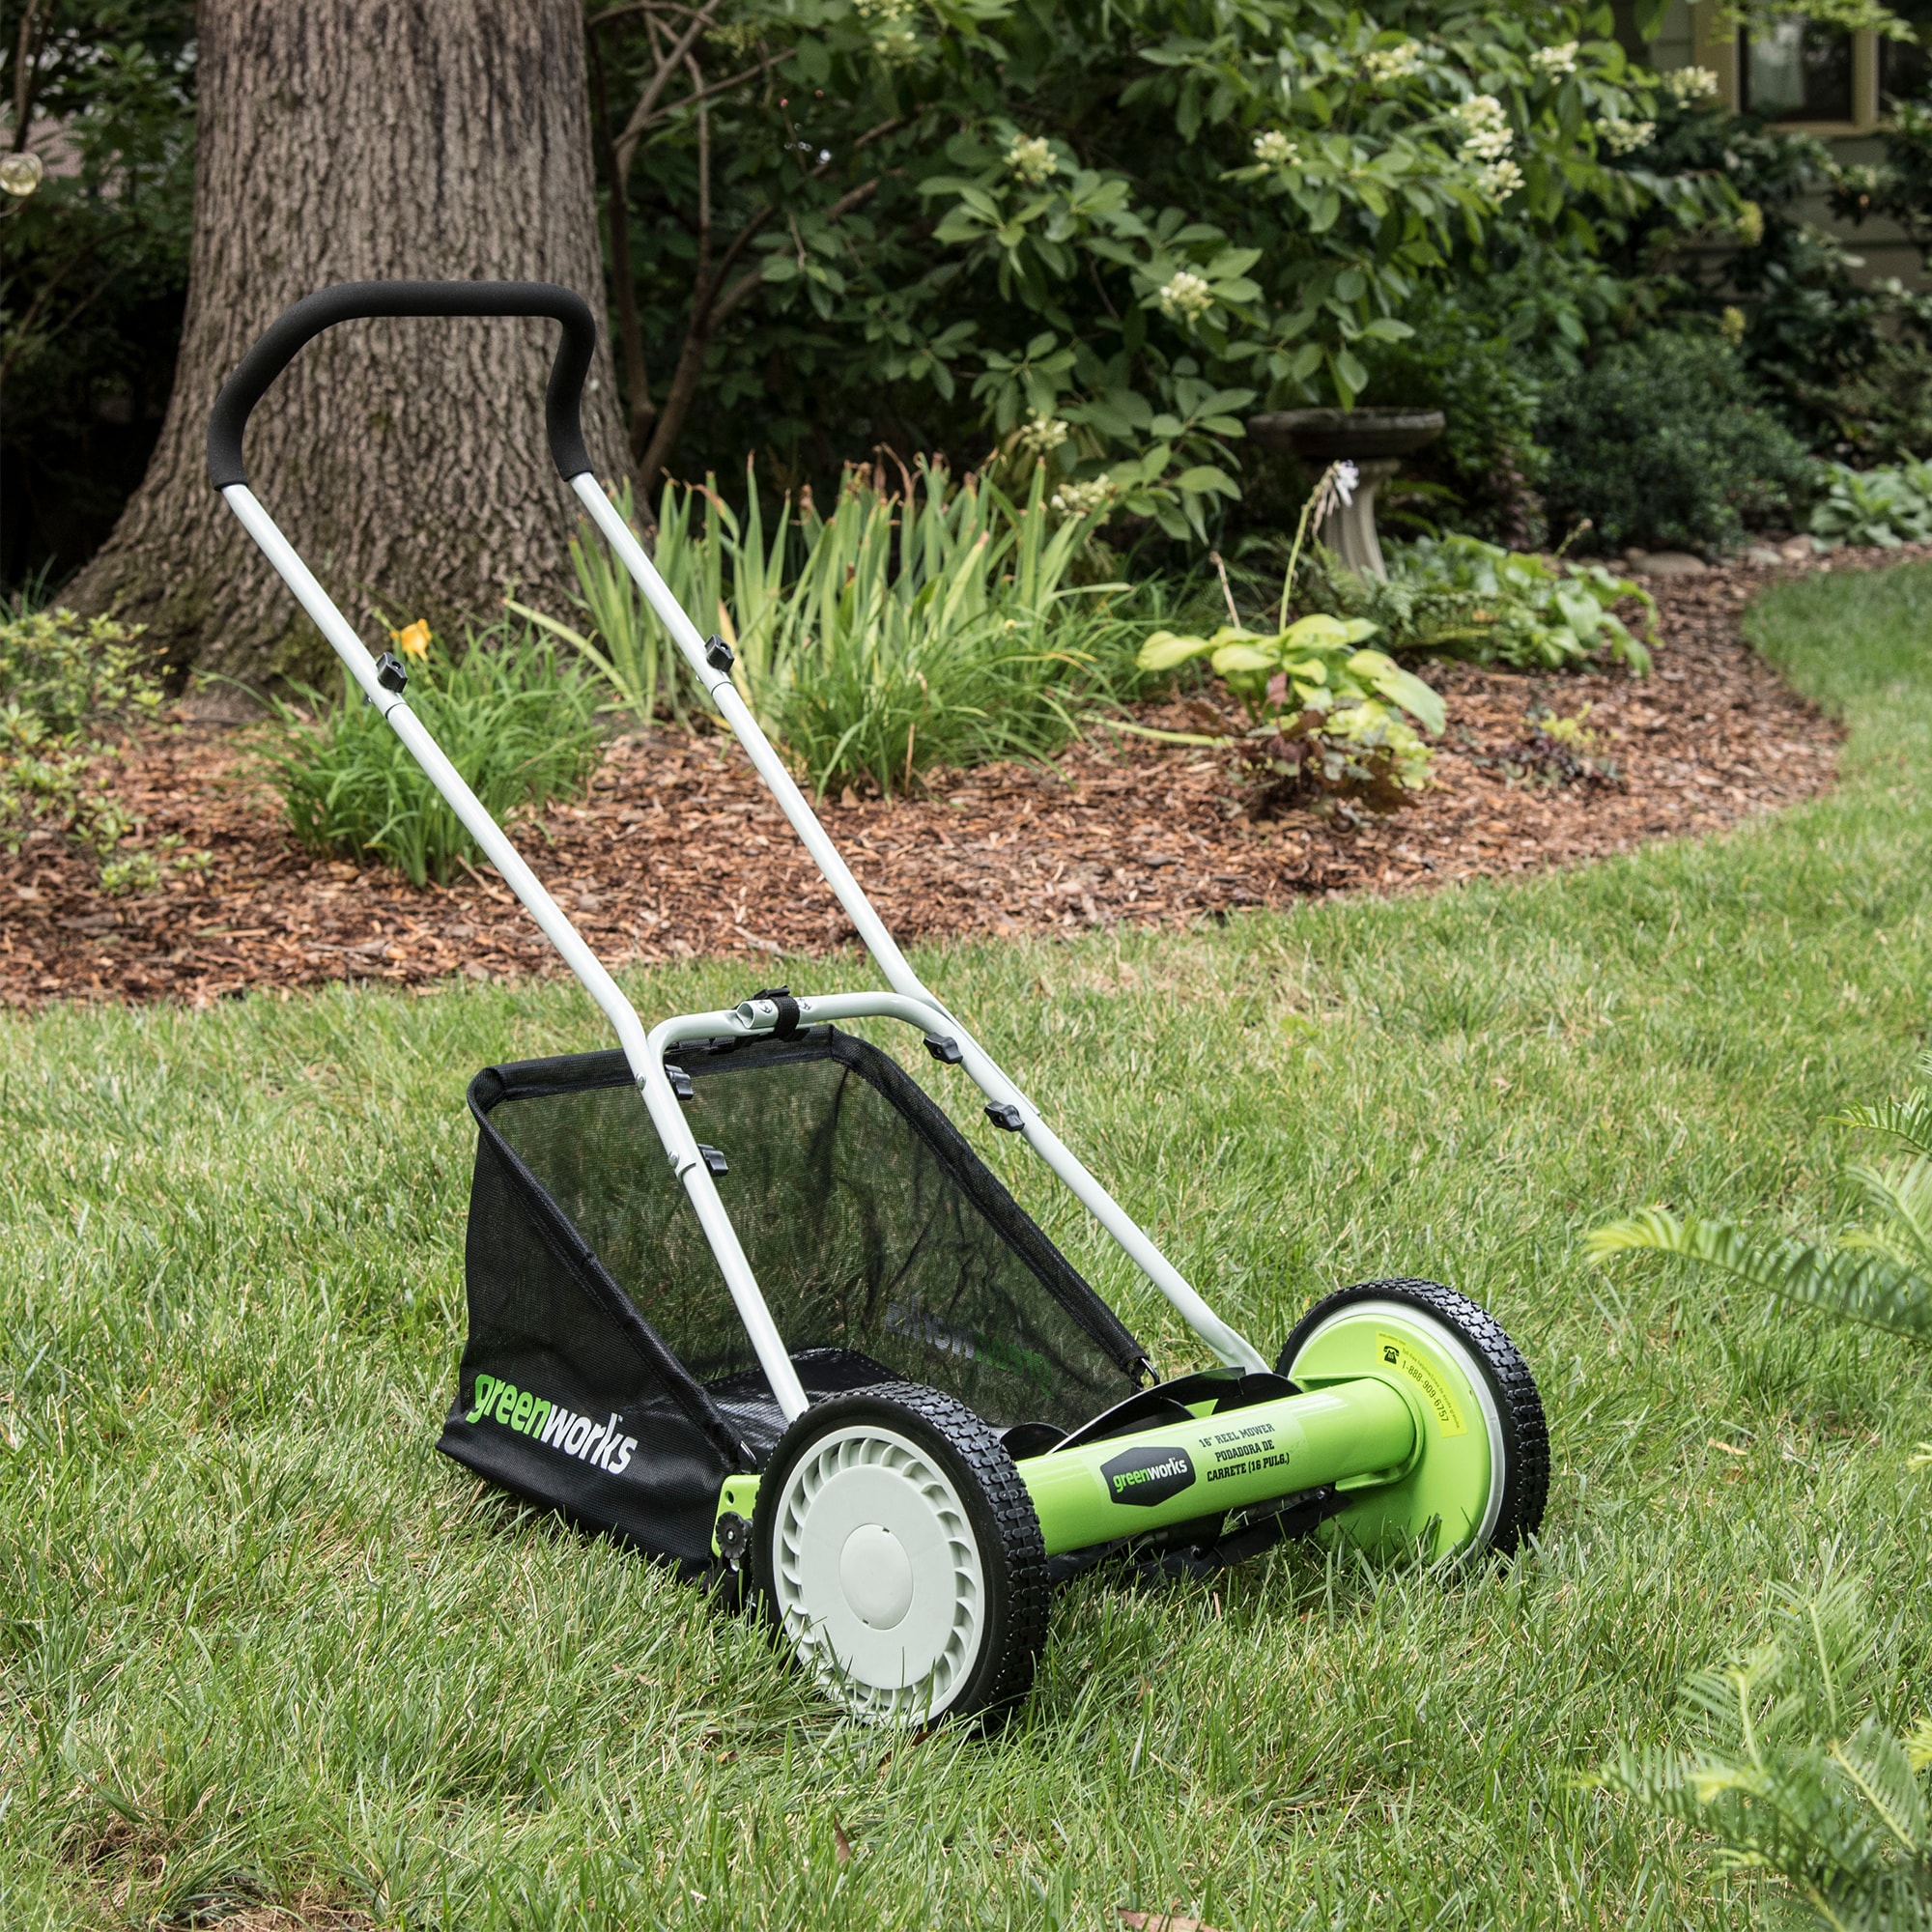 Greenworks 14-inch Reel Lawn Mower RM1400, 49% OFF